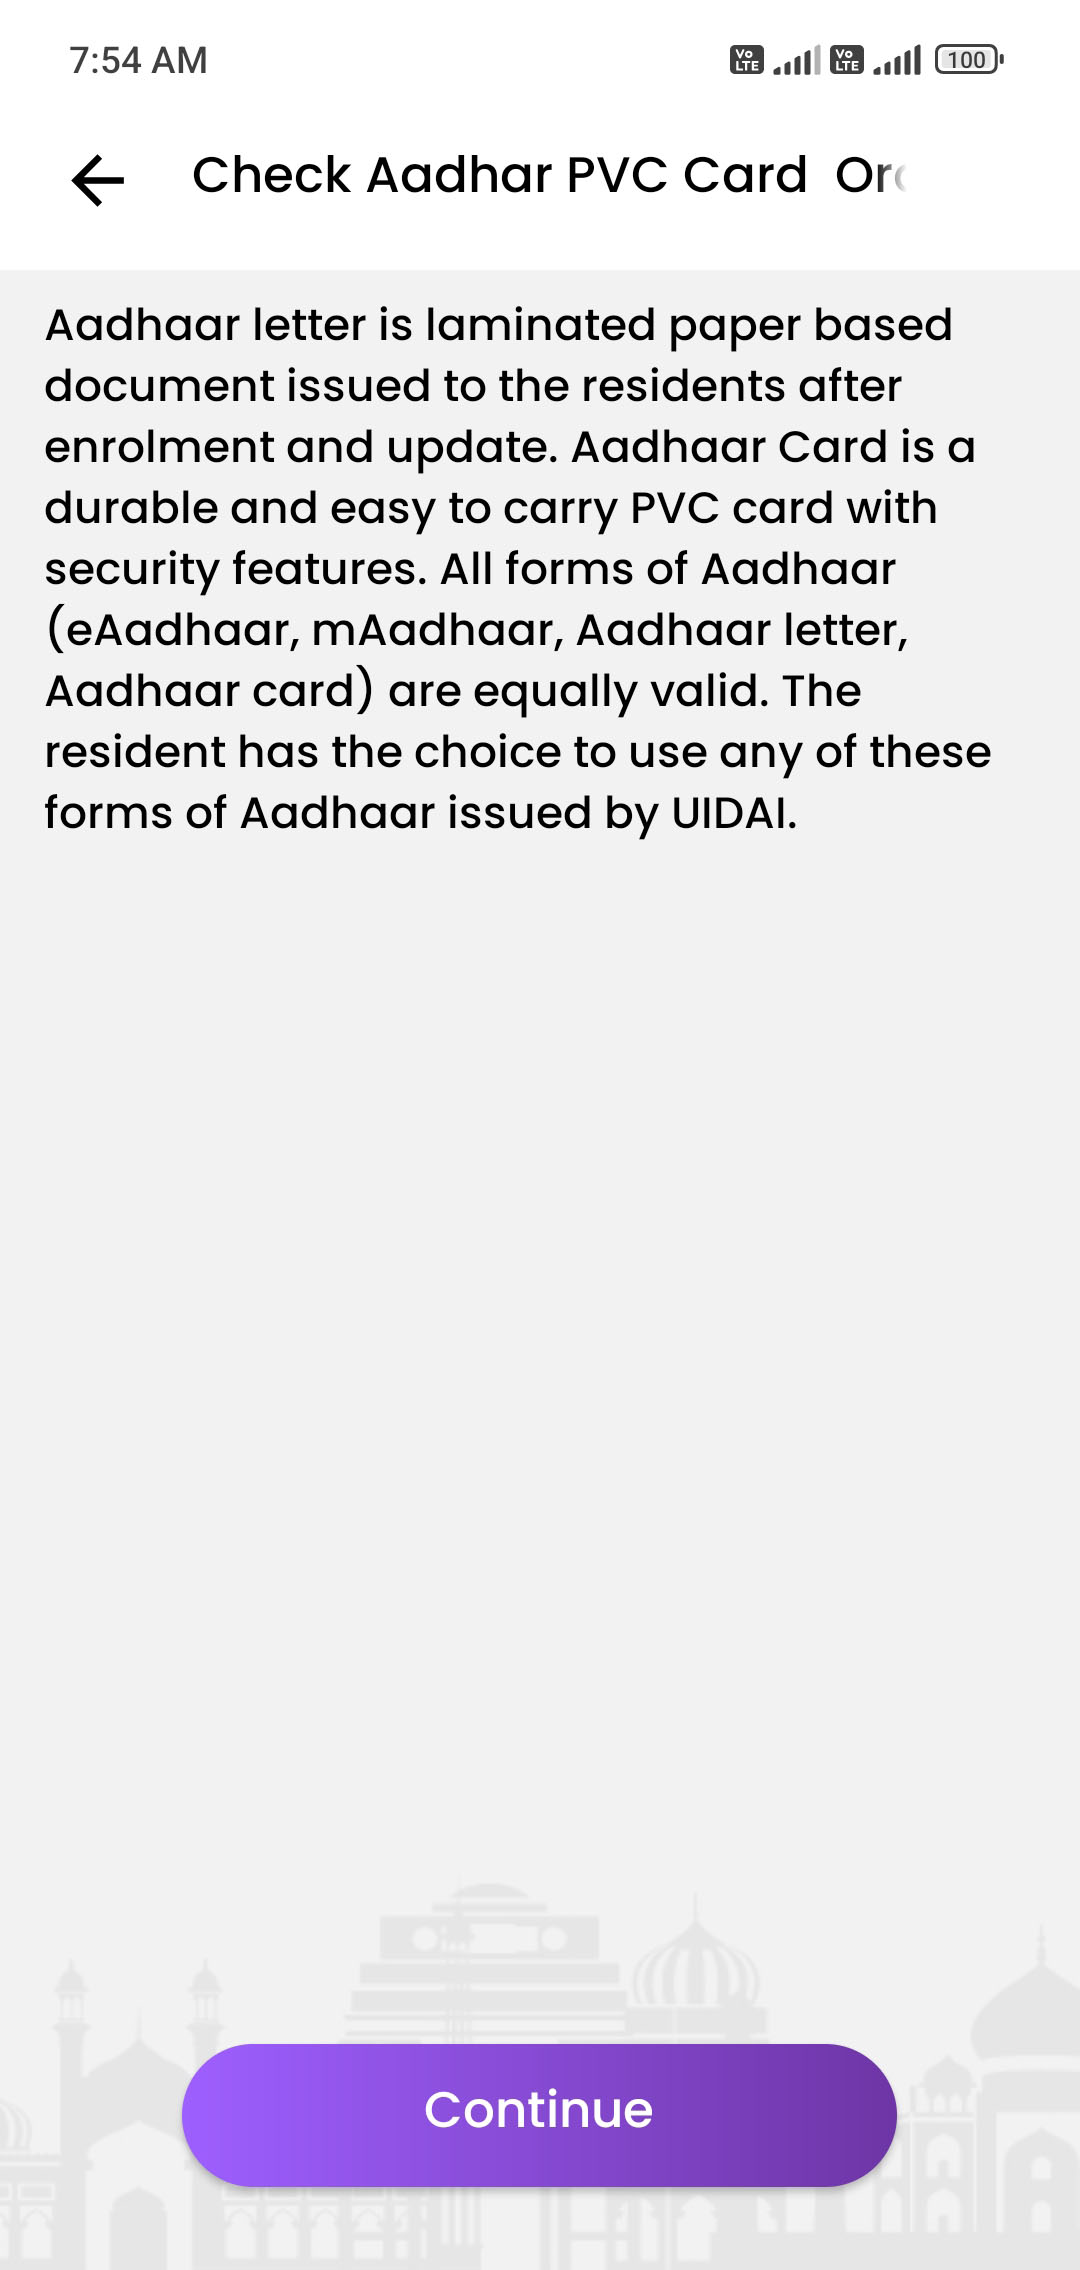 Aadhar Card-Check Status Guide